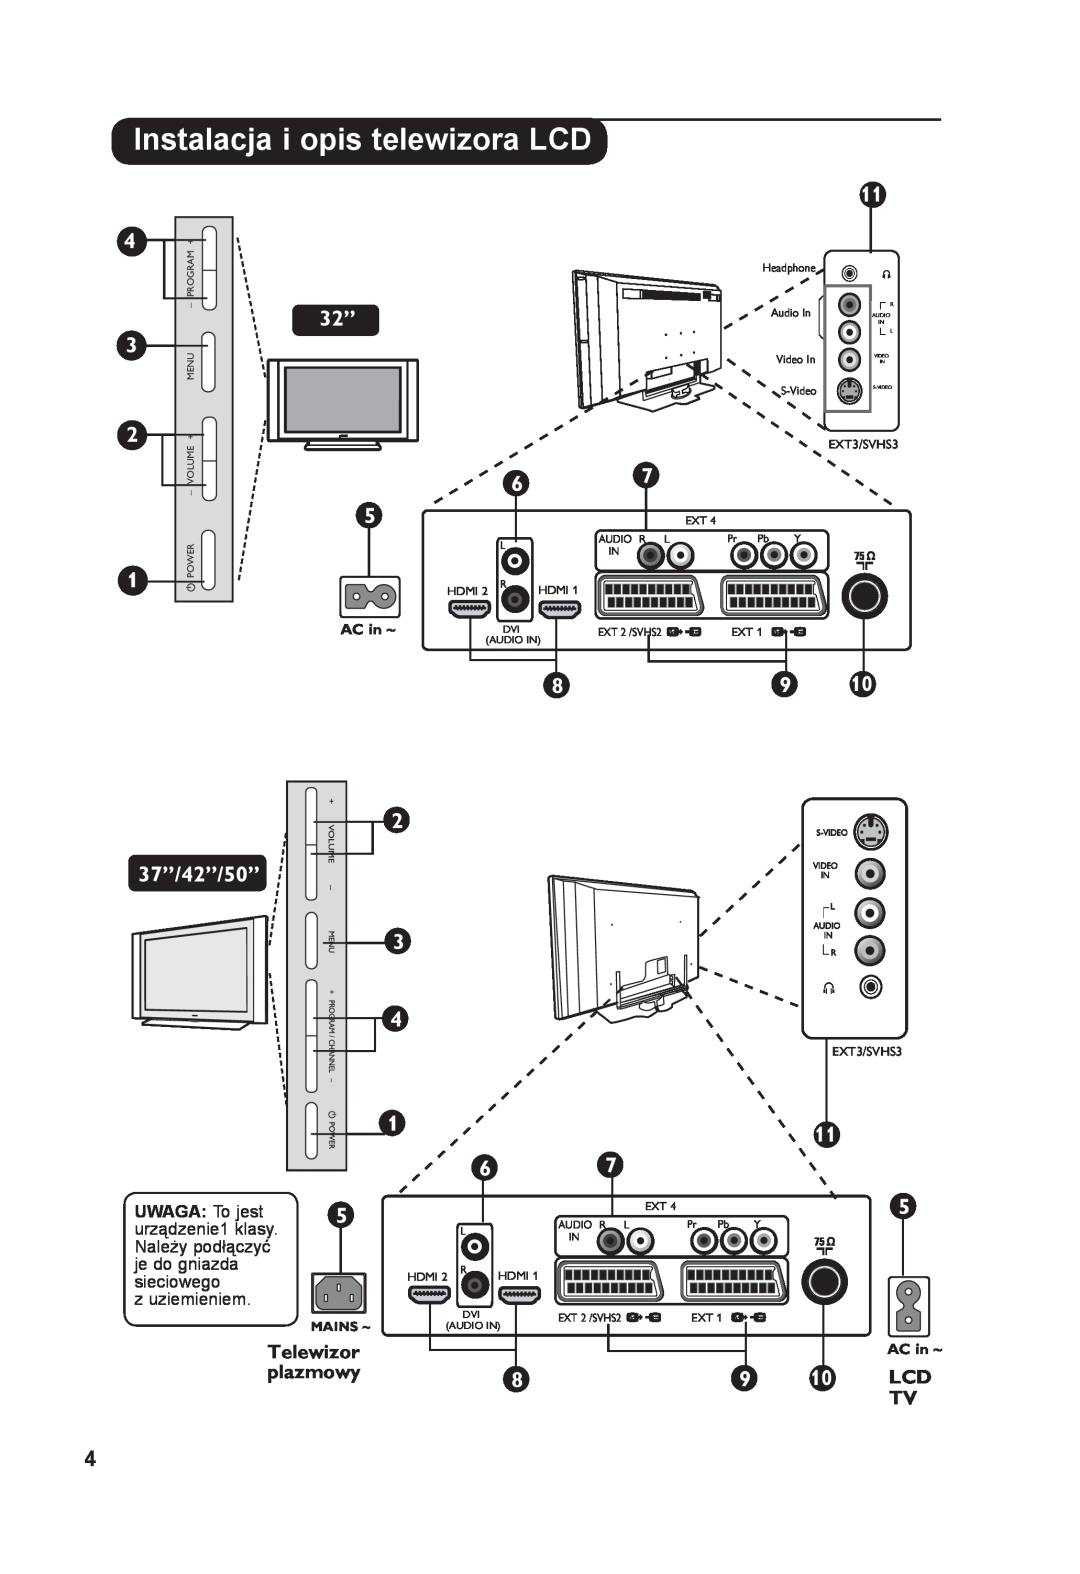 Philips 26PF7321 manual Instalacja i opis telewizora LCD, Telewizor, plazmowy, 37”/42”/50”, AC in ~, EXT3/SVHS3, Mains ~ 